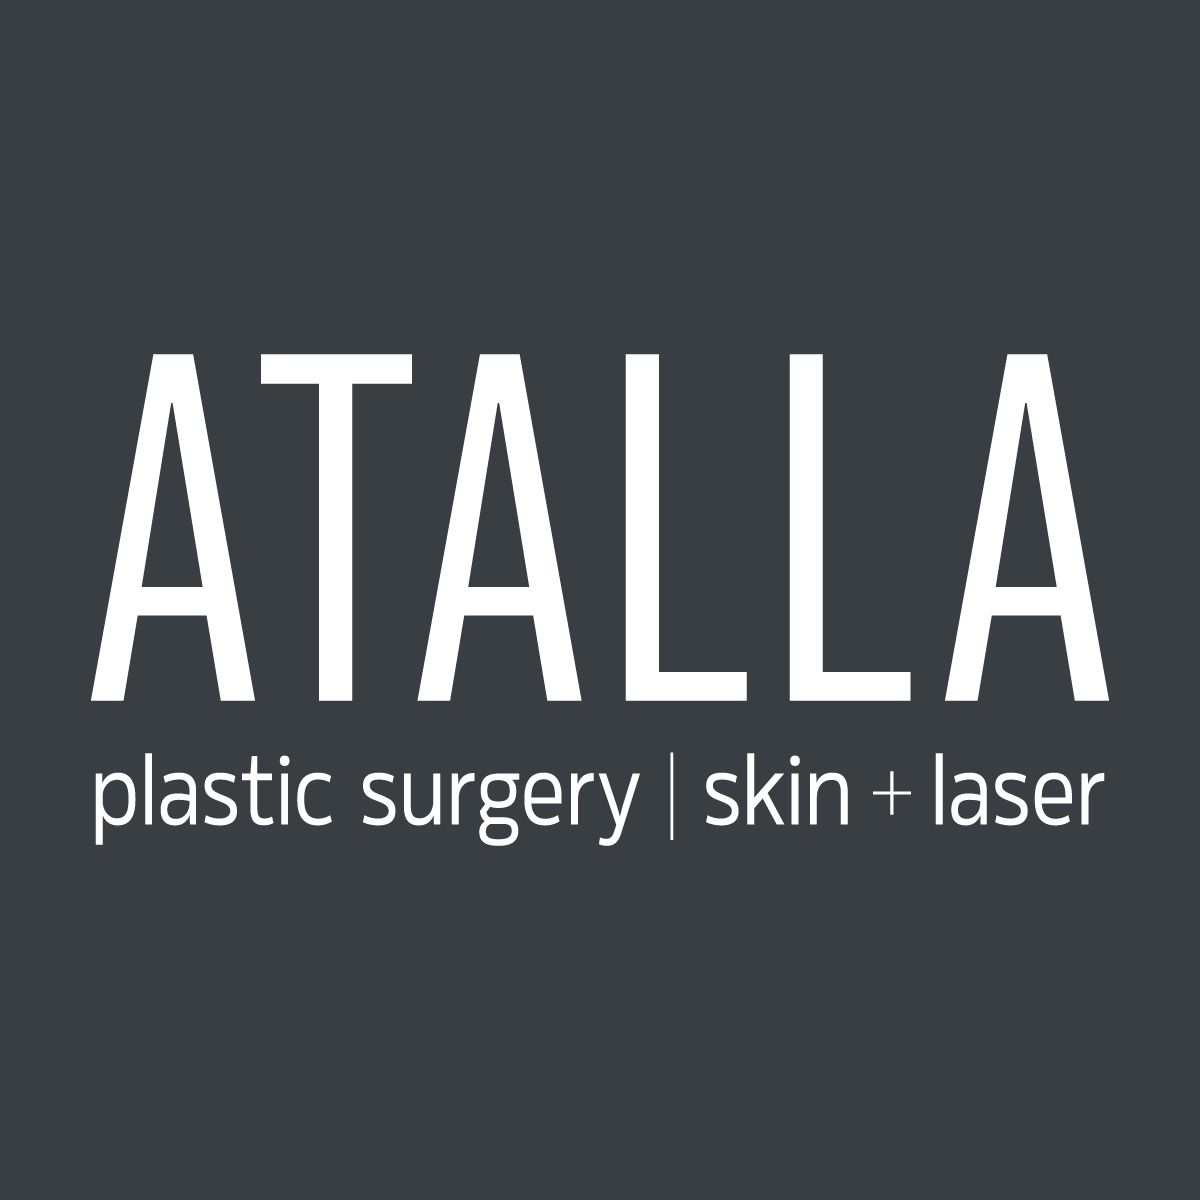 ATALLA PLASTIC SURGERY